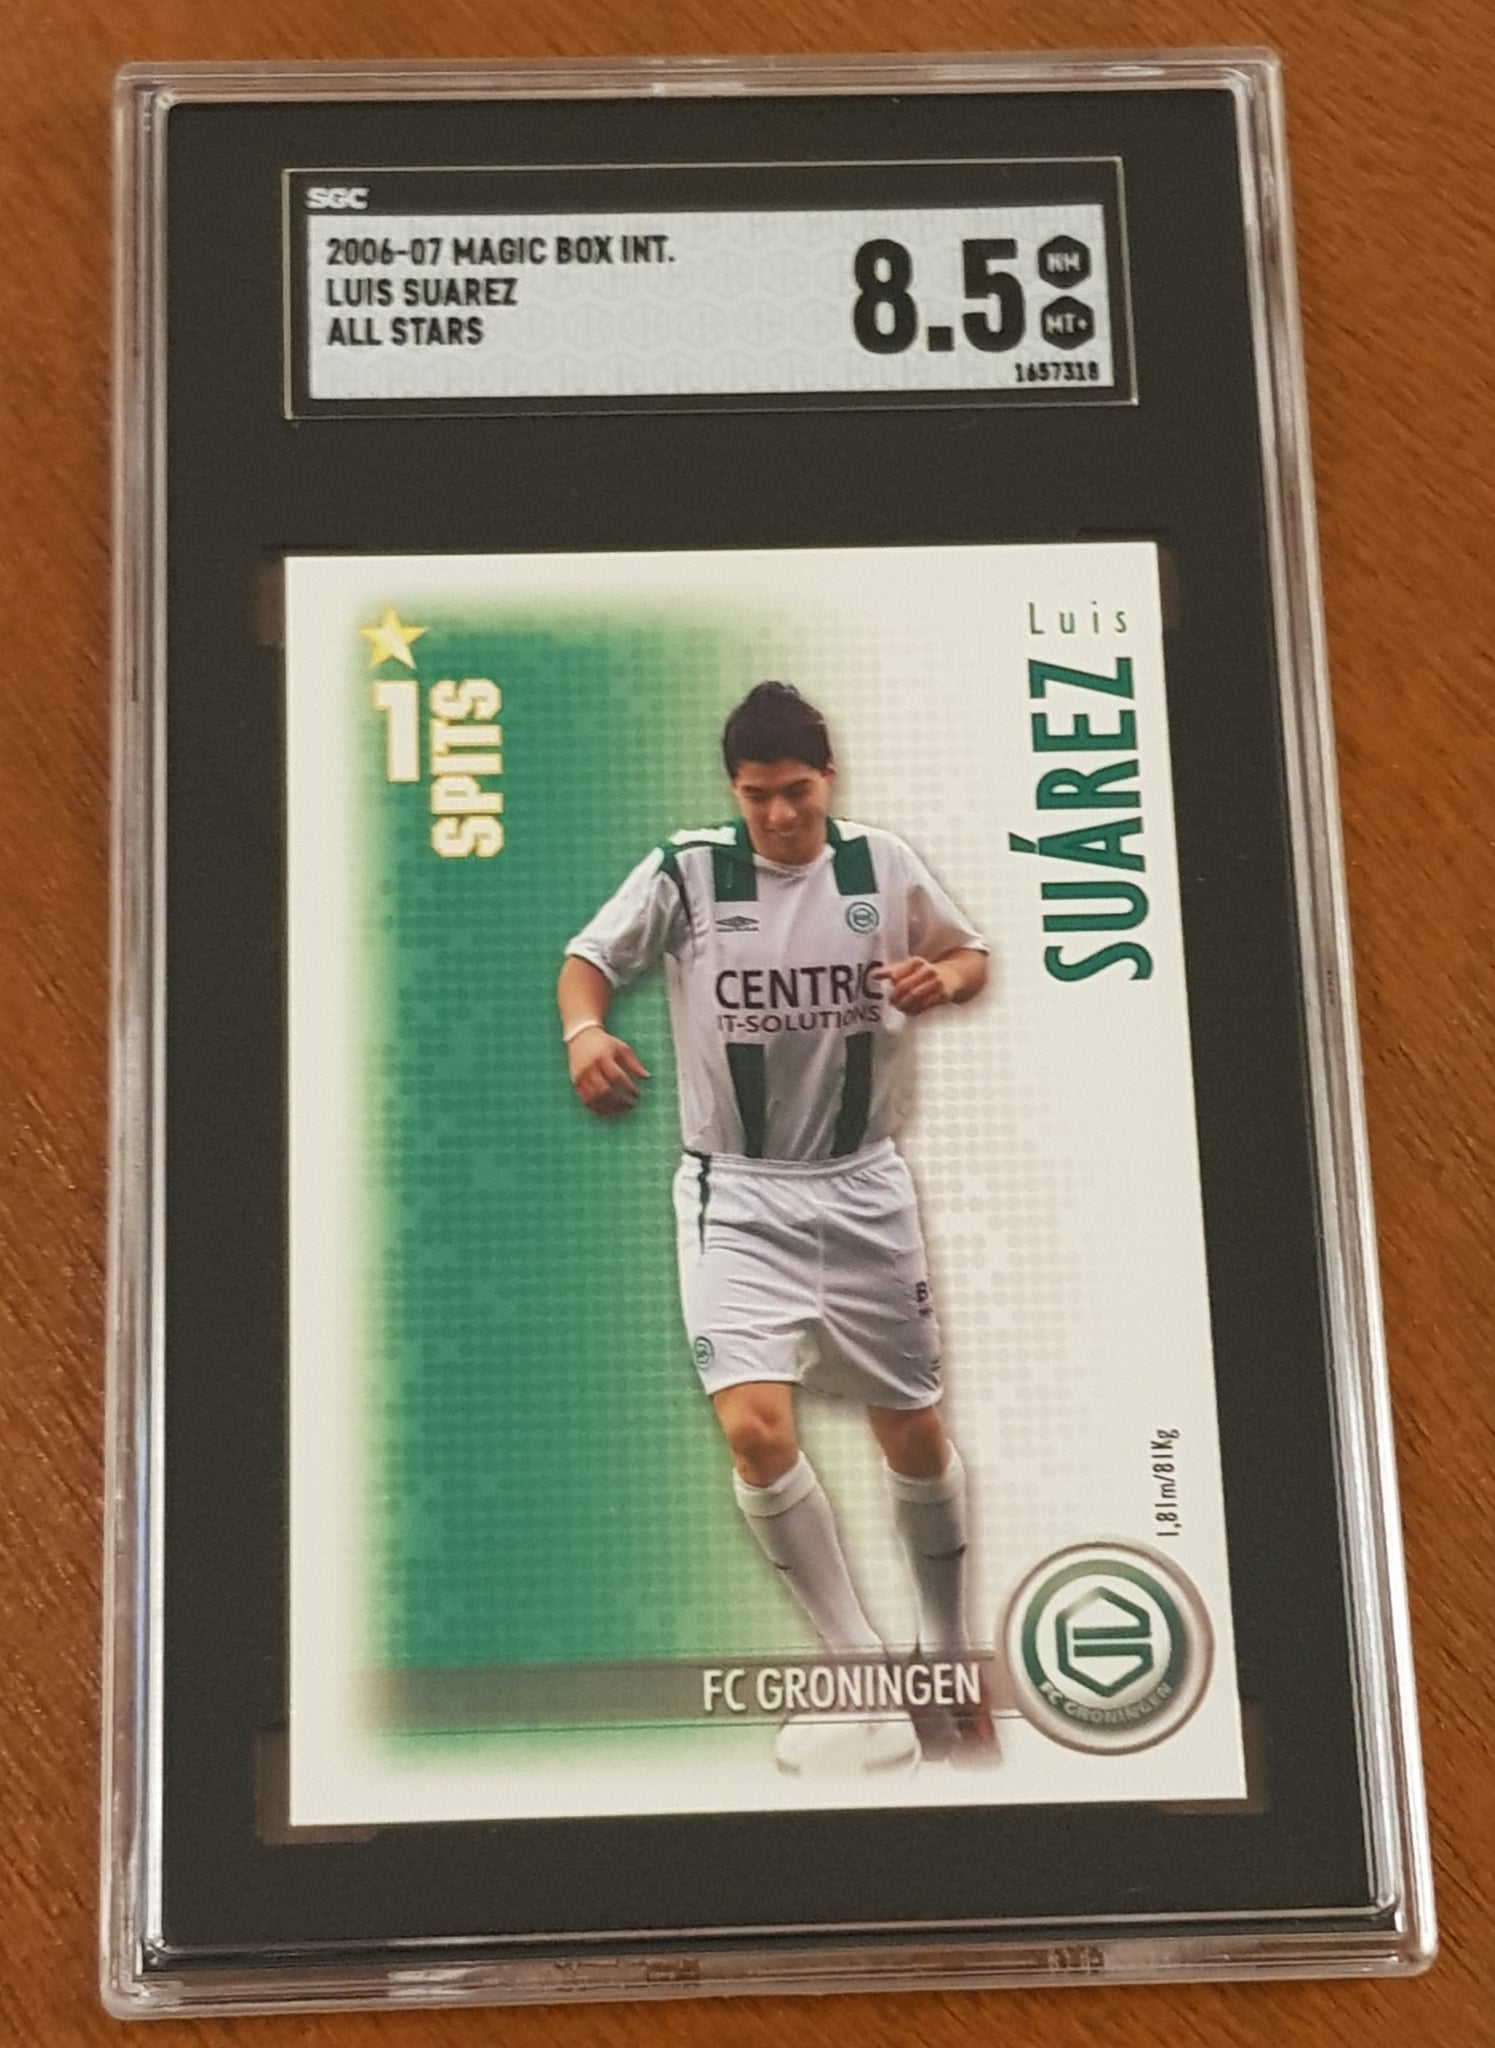 2006-07 All-Stars Eredivisie Luis Suarez SGC 8.5 Rookie Card